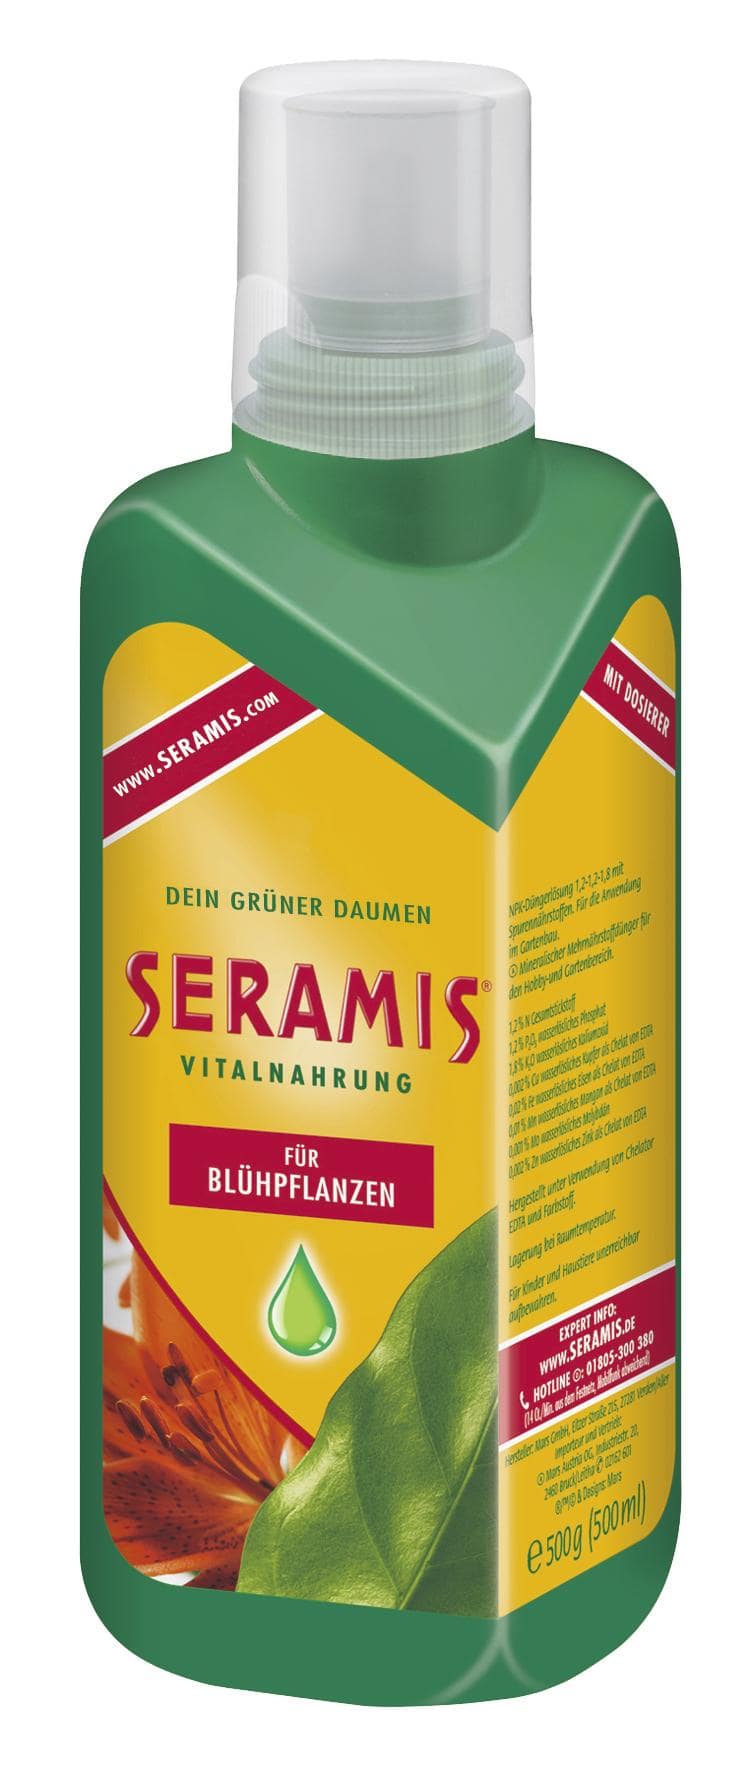 Seramis Vitalnahrung Blühpflanzen - 500 ml